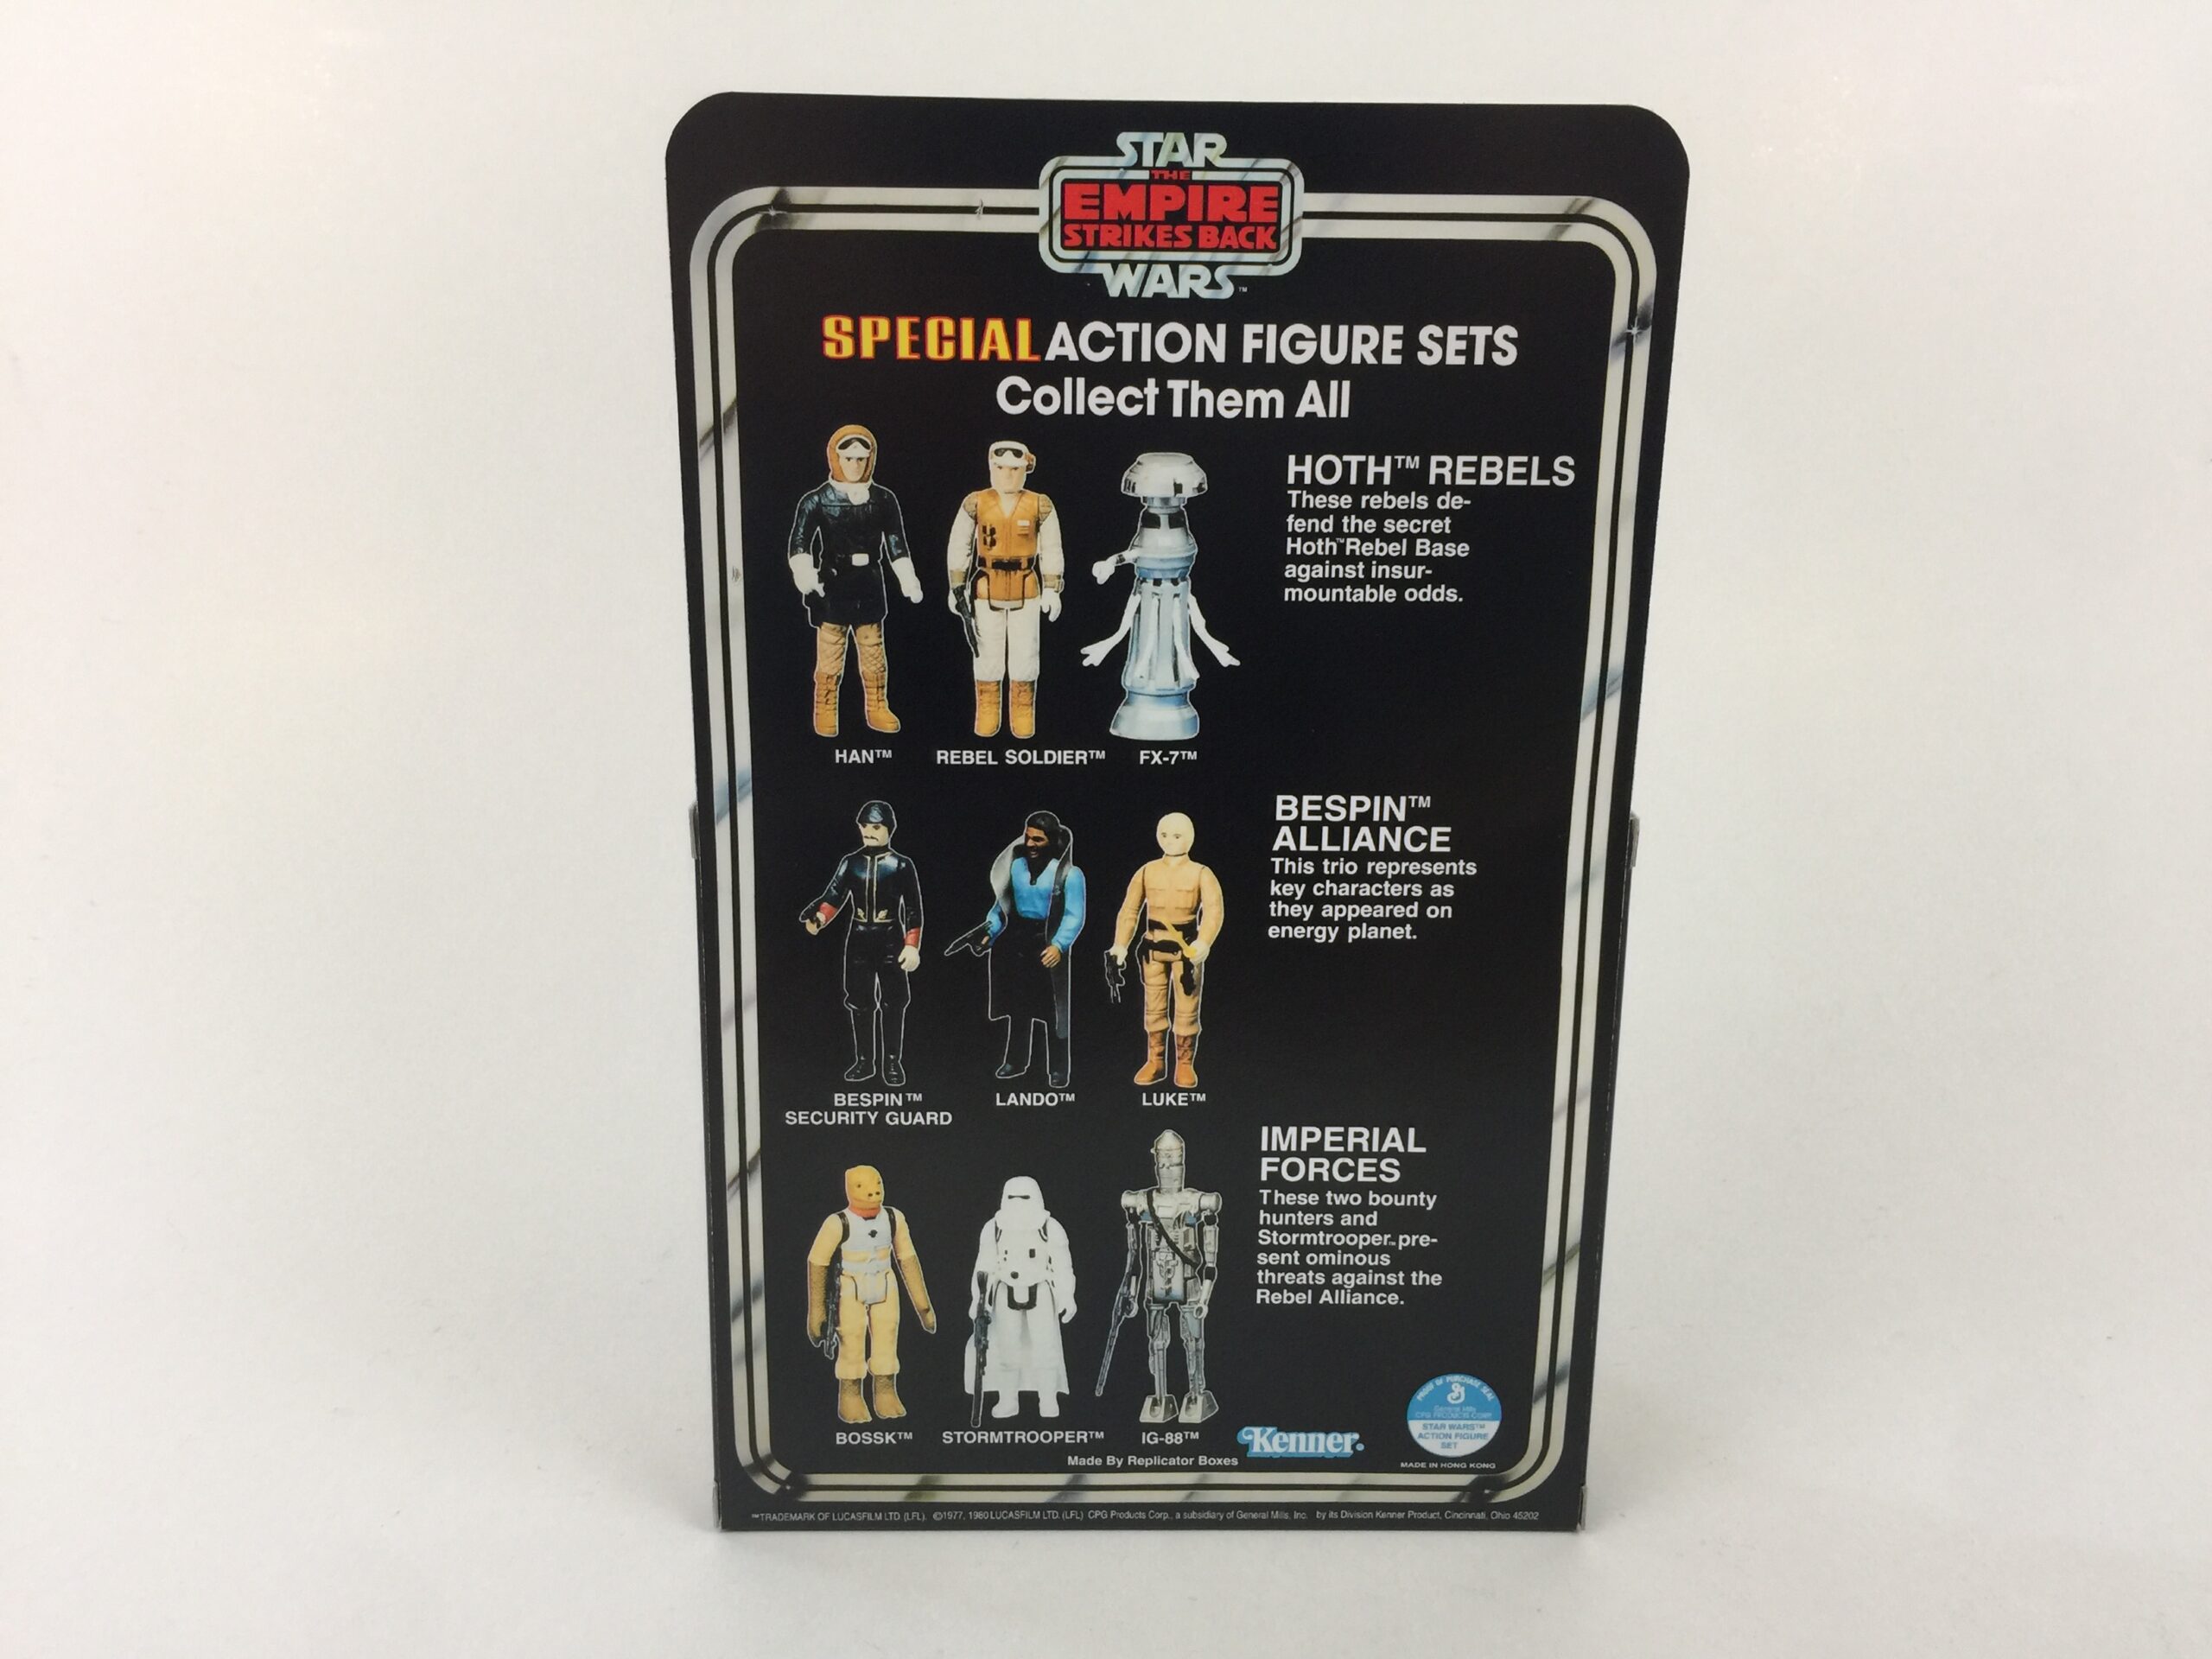 Gift set Star Wars - Box Sets